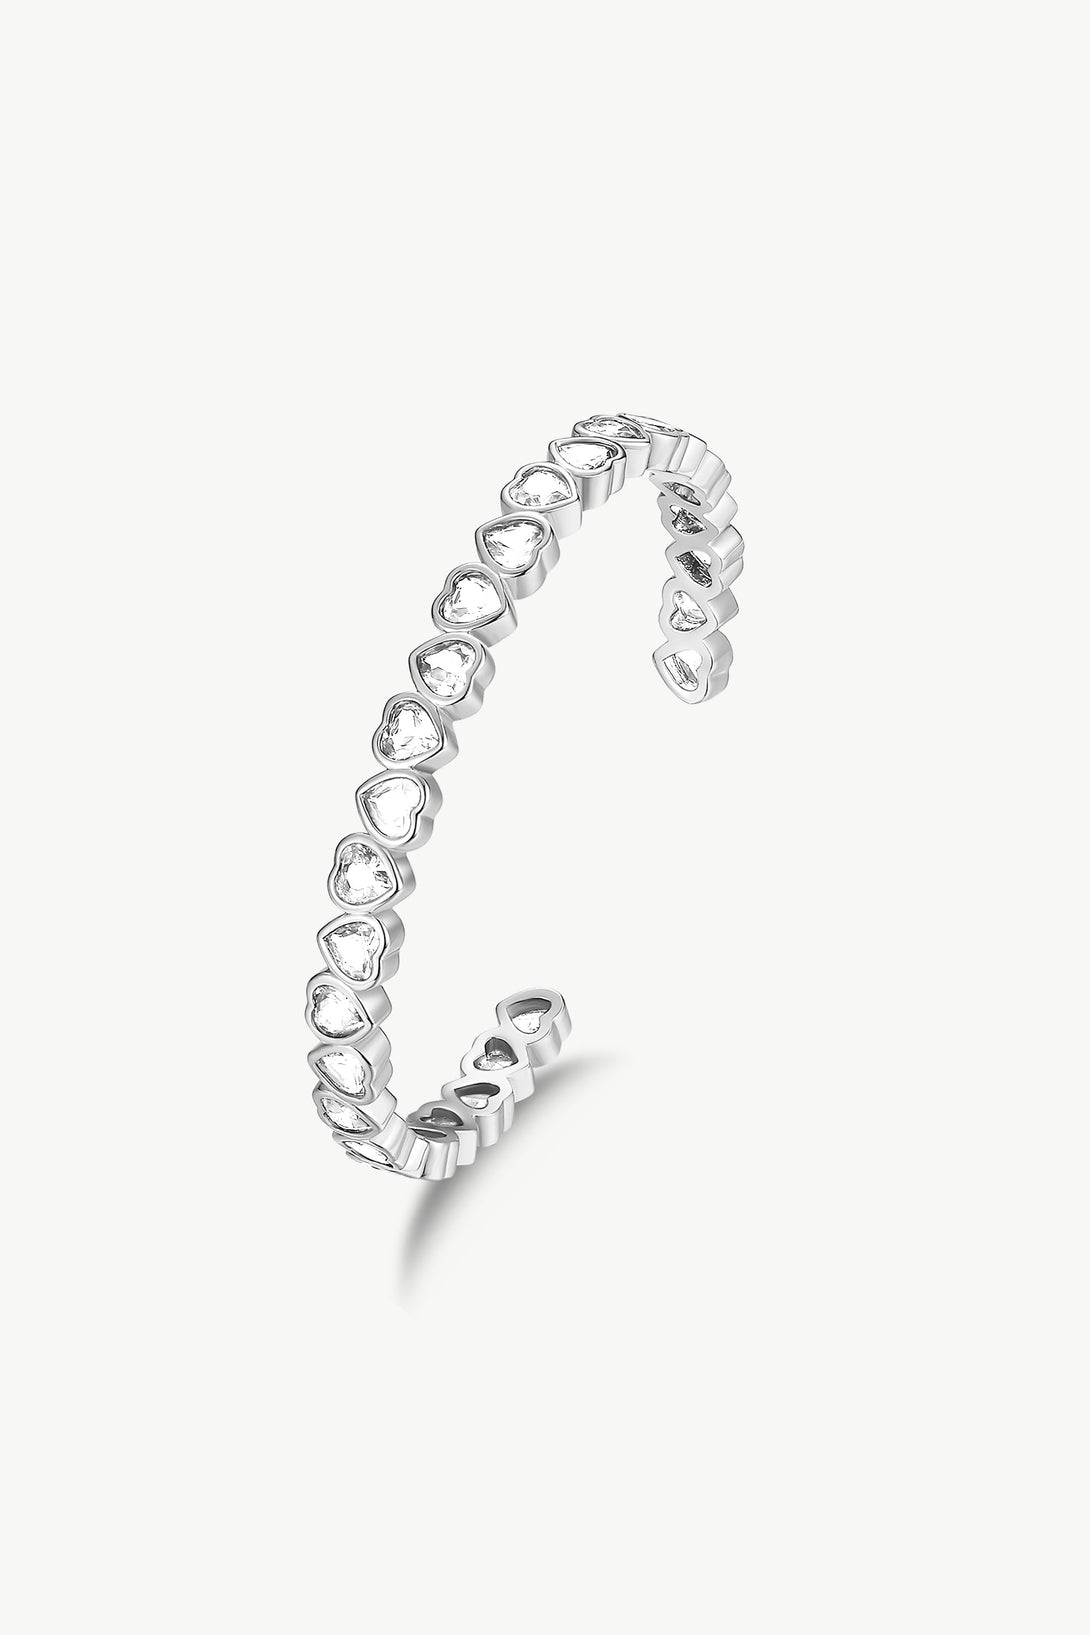 Silver Heart Shaped Zirconia Bangle Bracelet Set - Classicharms